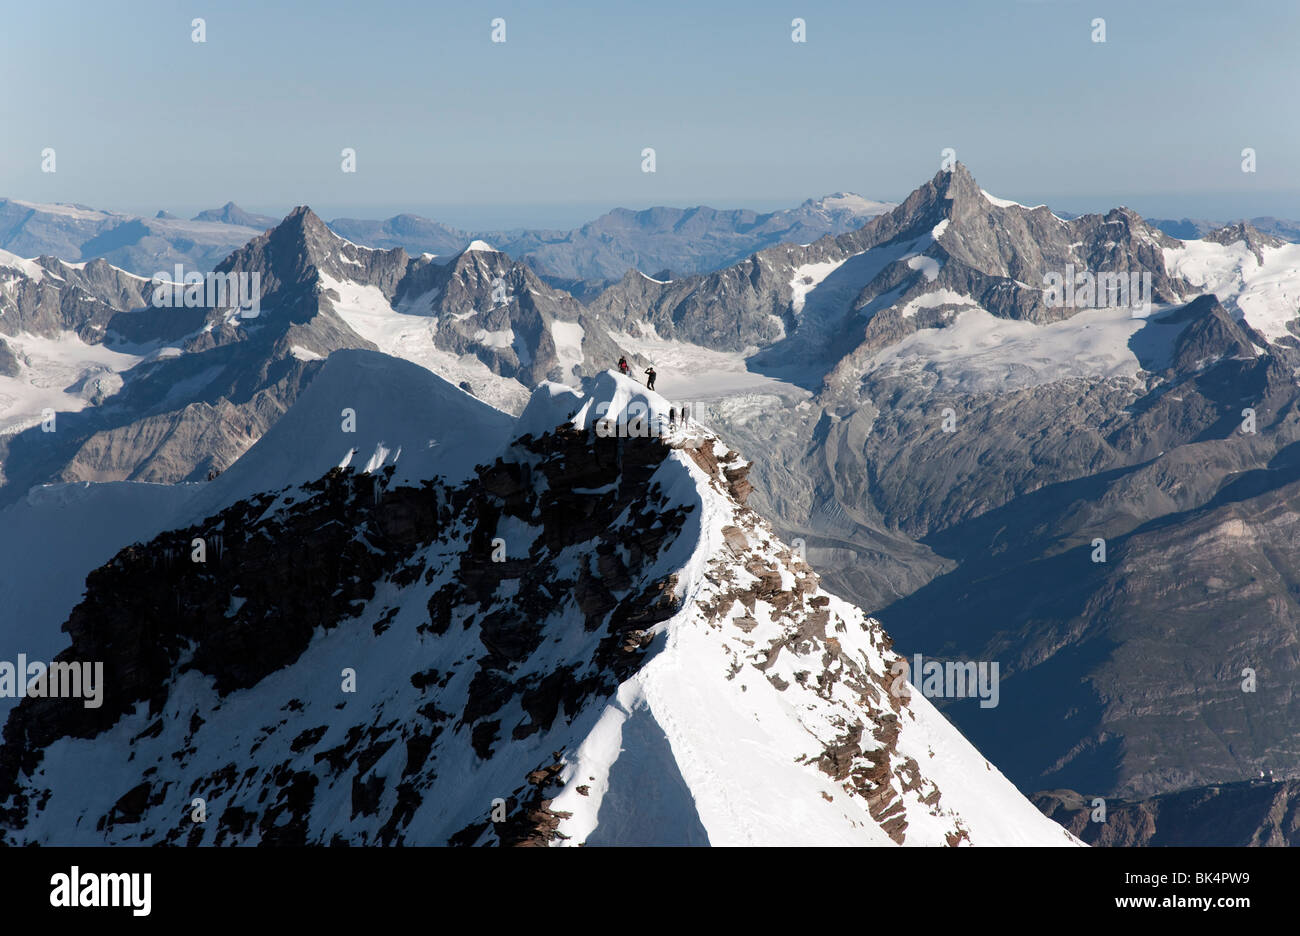 Climbers on the Lyskamm Peak in the Monte Rosa massif, Italian Alps, Piedmont, Italy, Europe Stock Photo